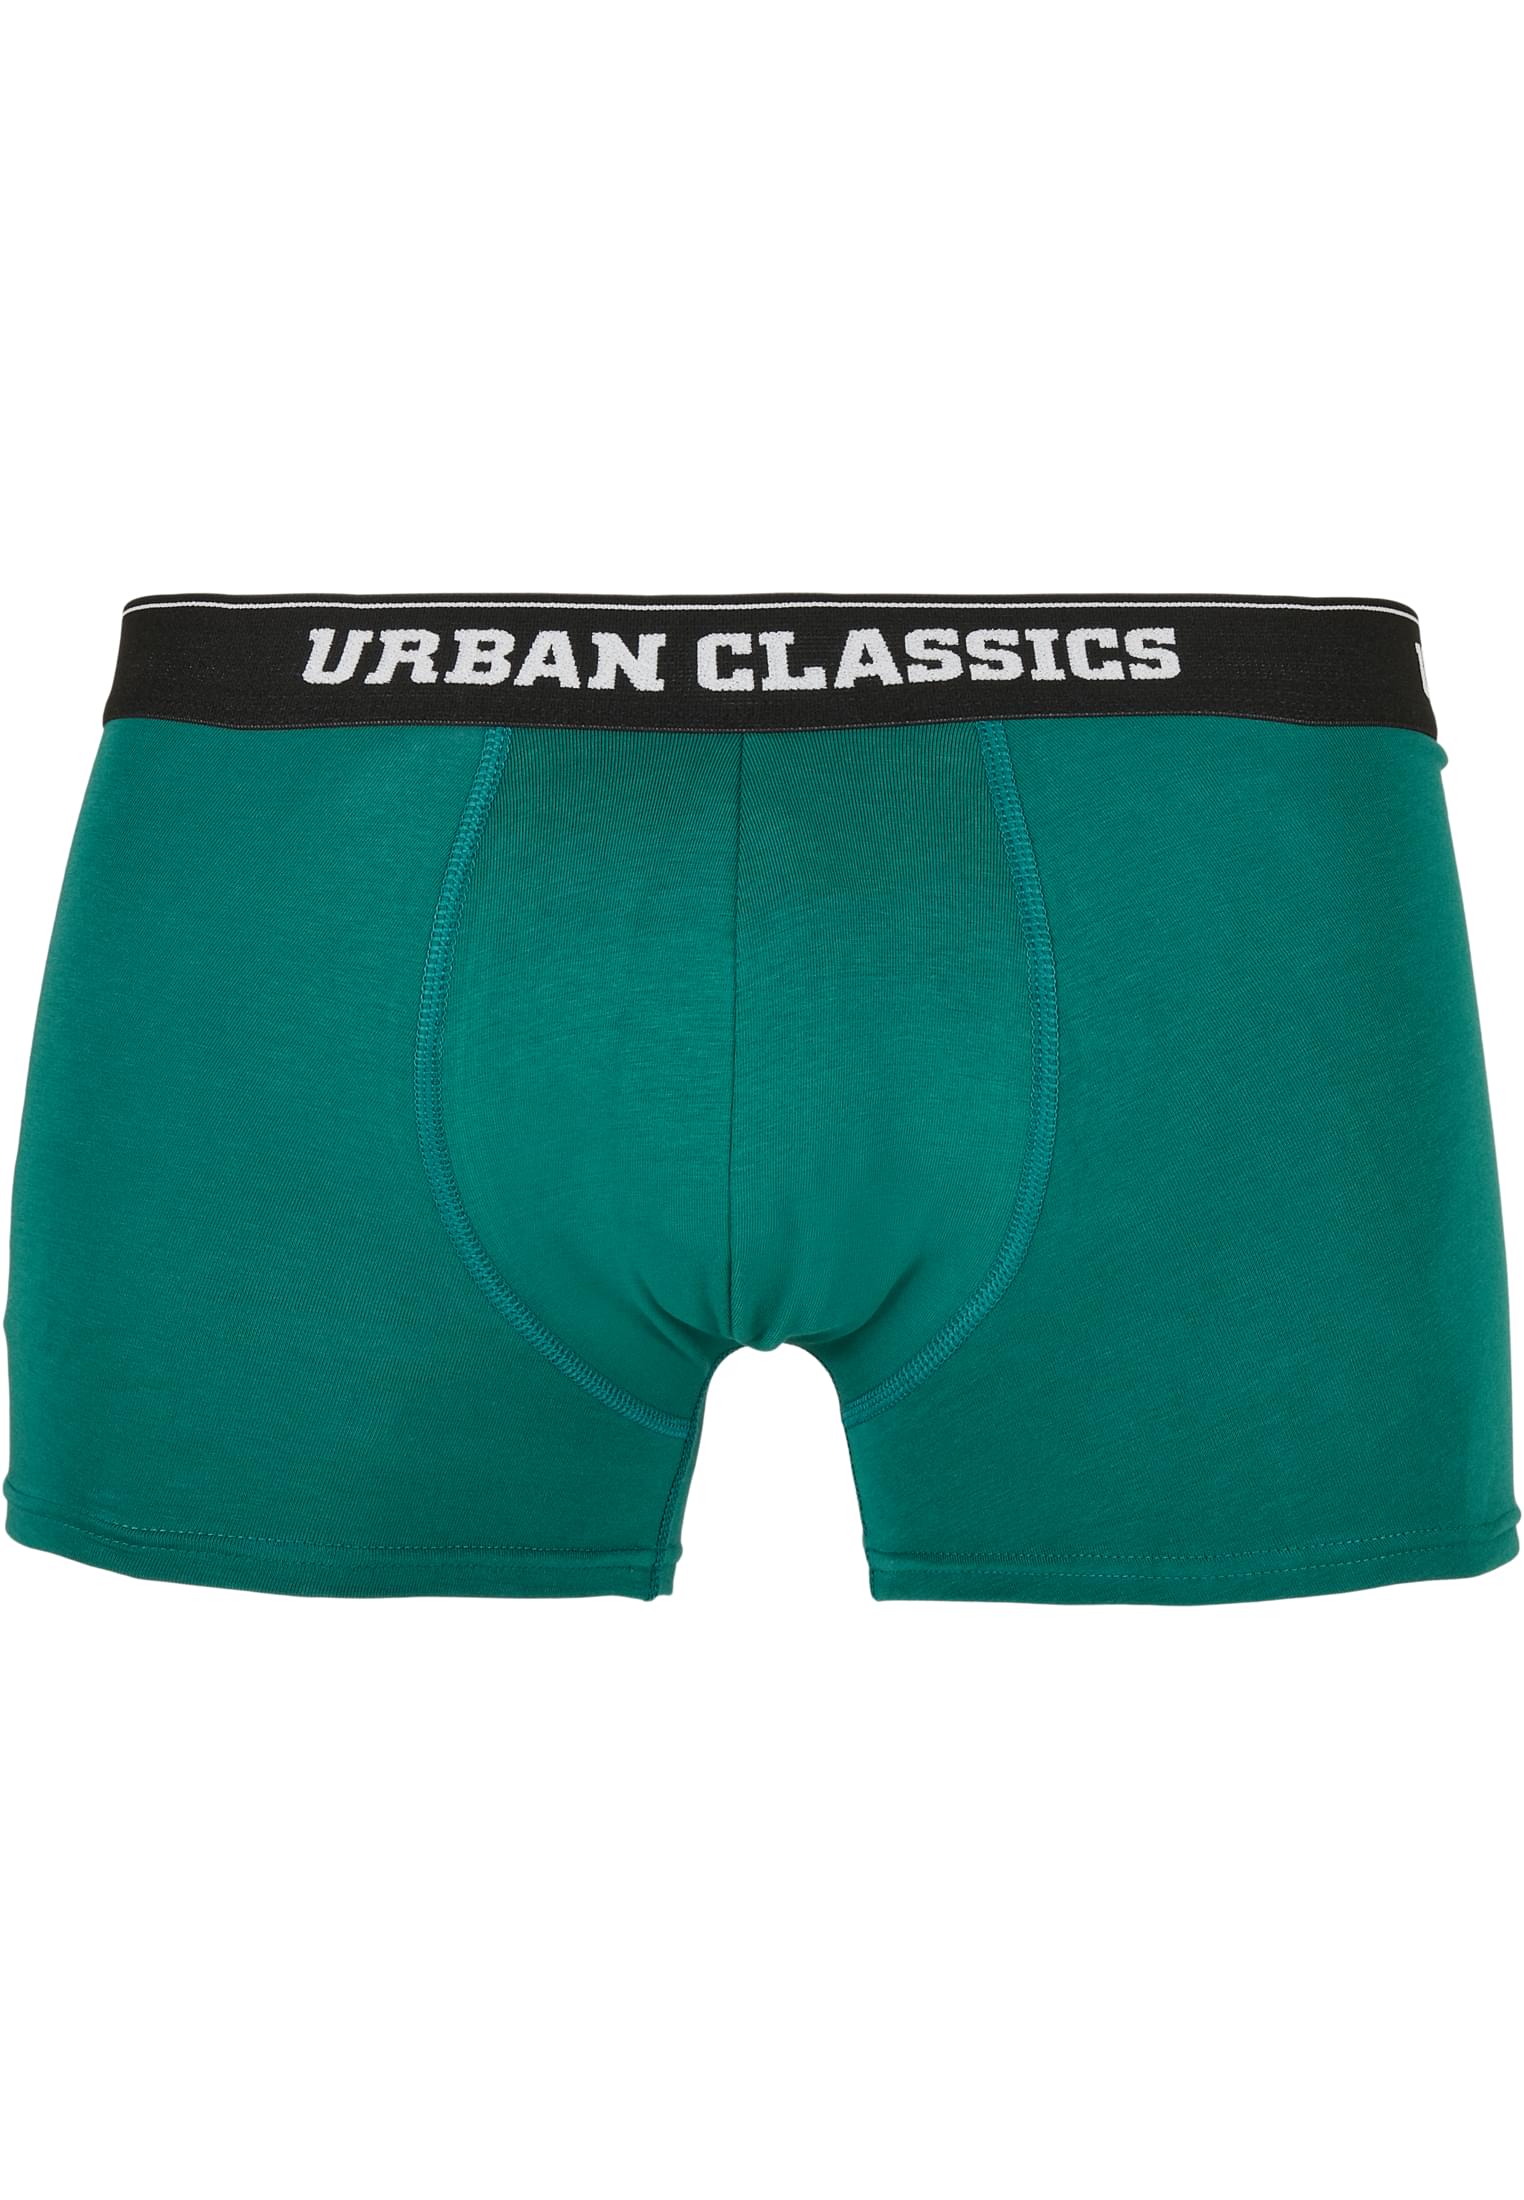 Underwear Organic Boxer Shorts 3-Pack in Farbe pinstripe aop+black+treegreen